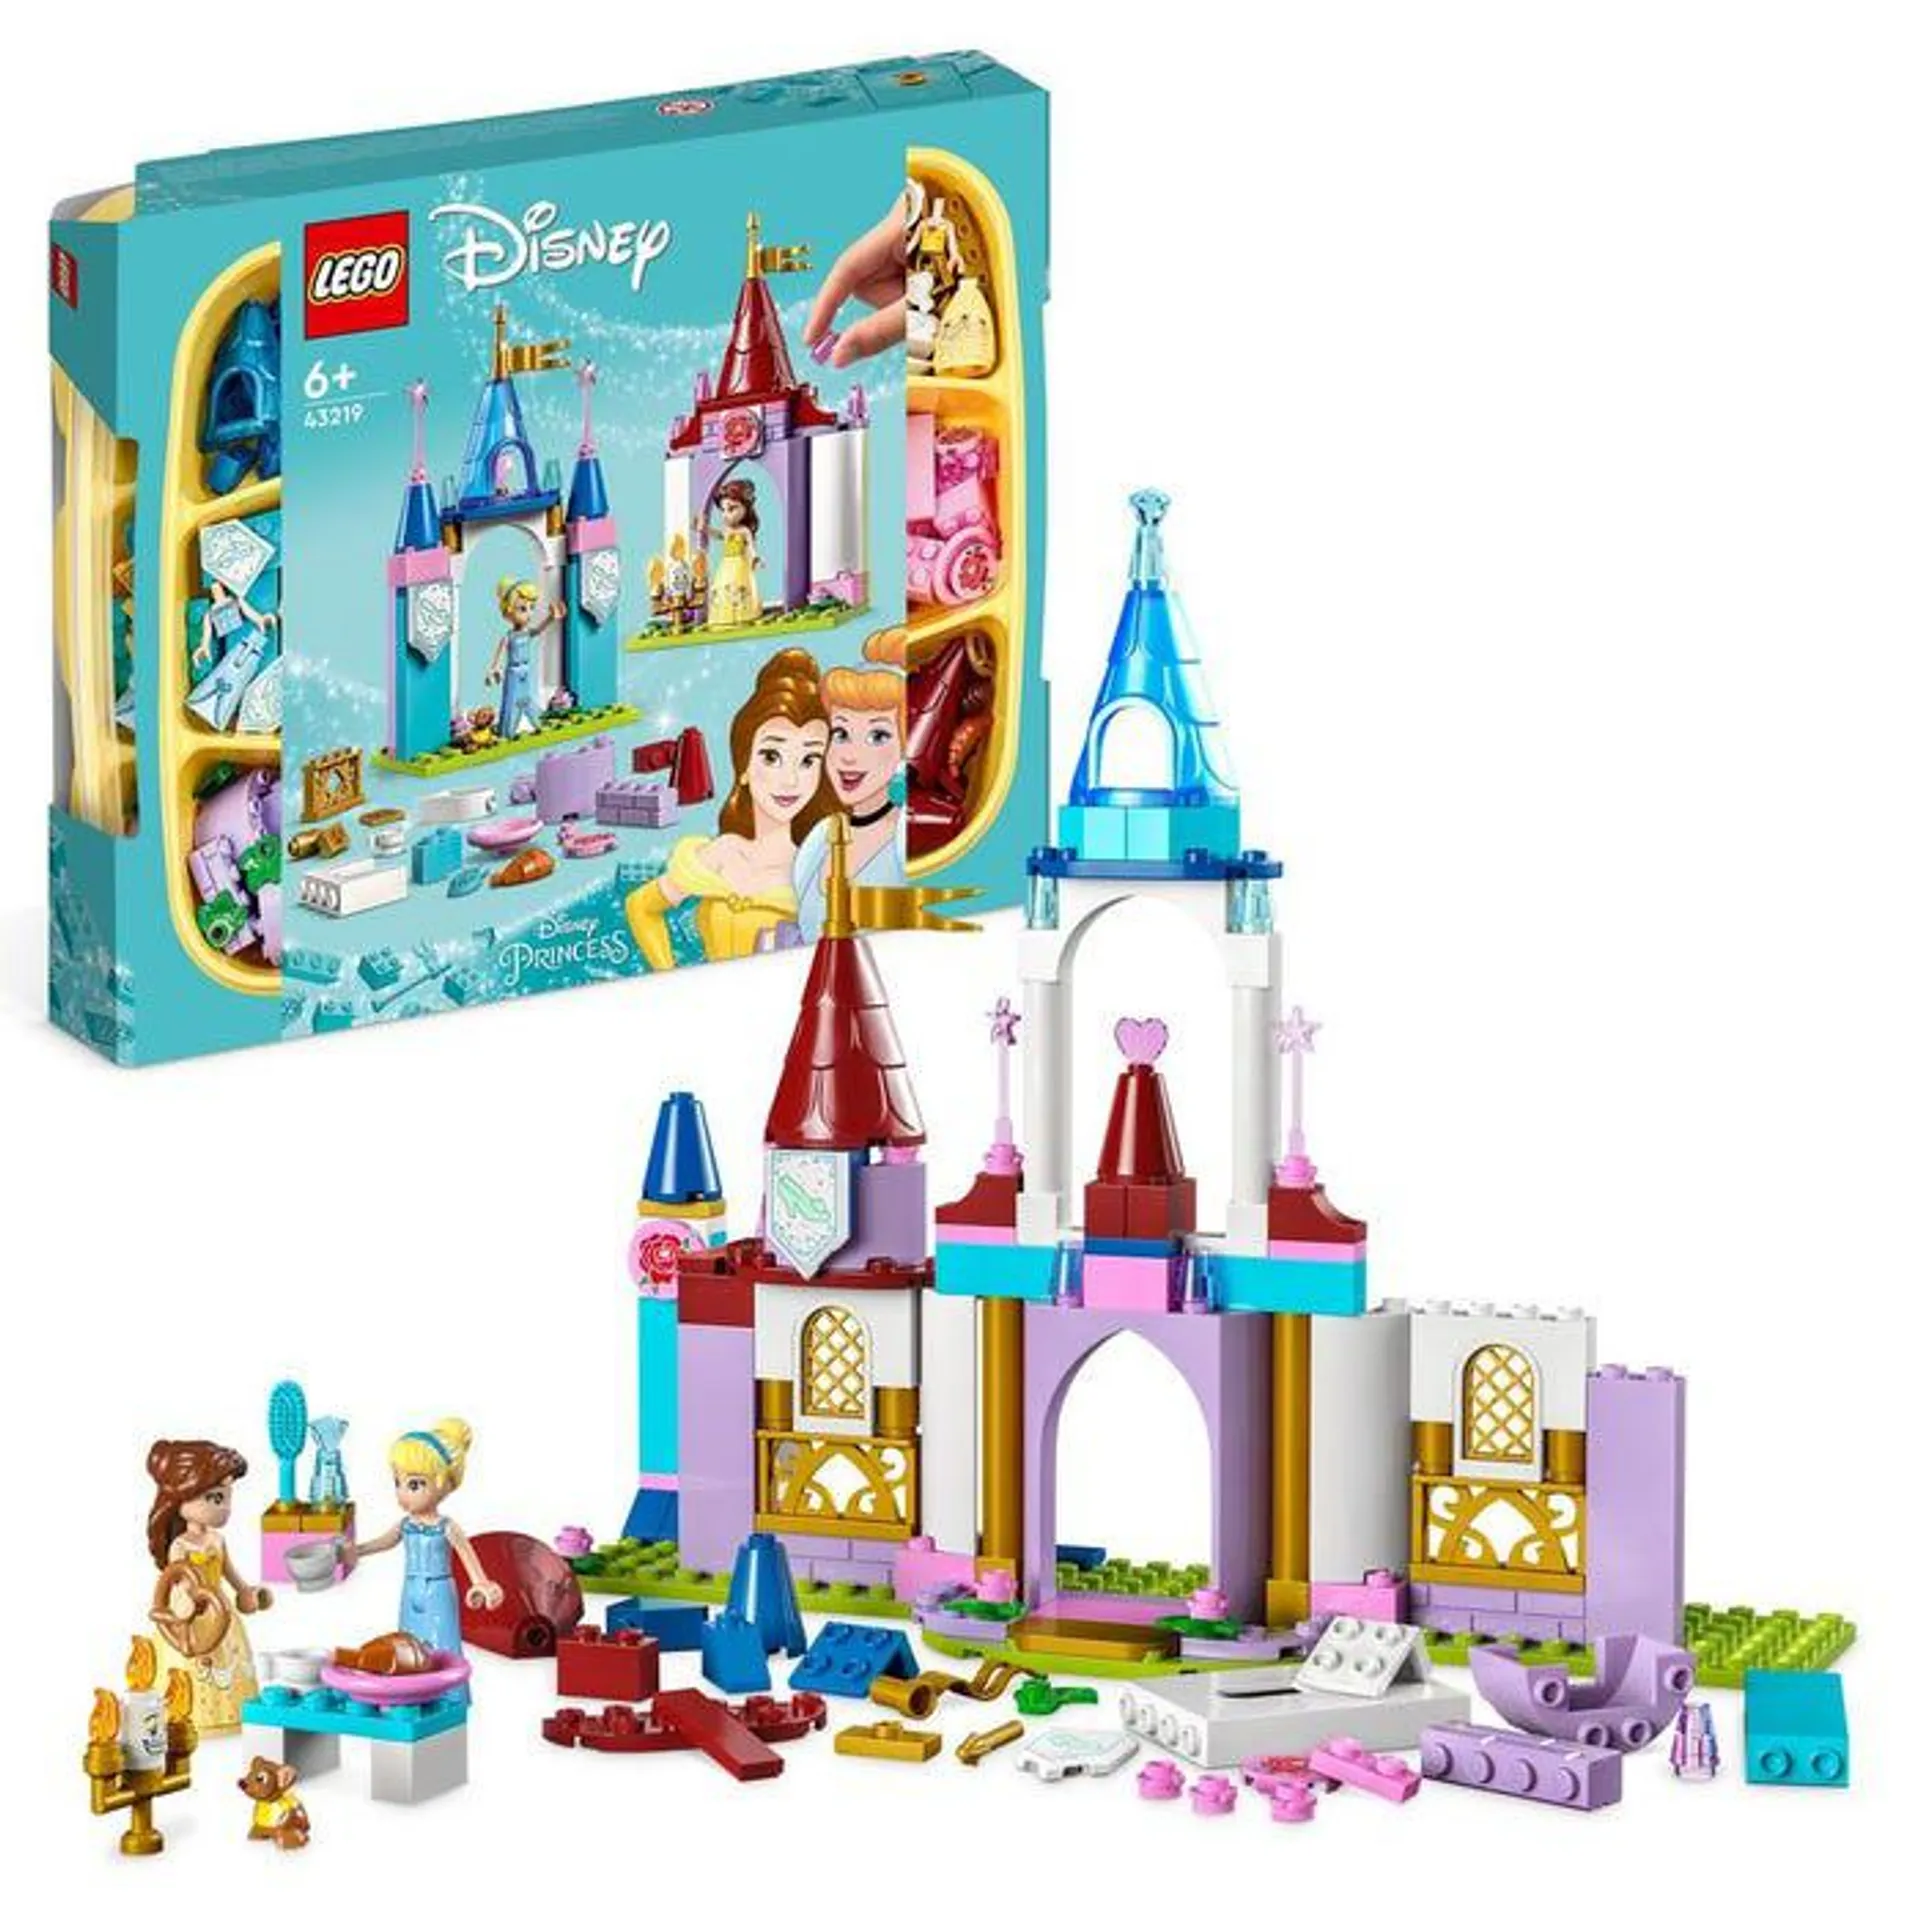 LEGO® 43219 | Disney Princess Creative Castles Toy Playset​